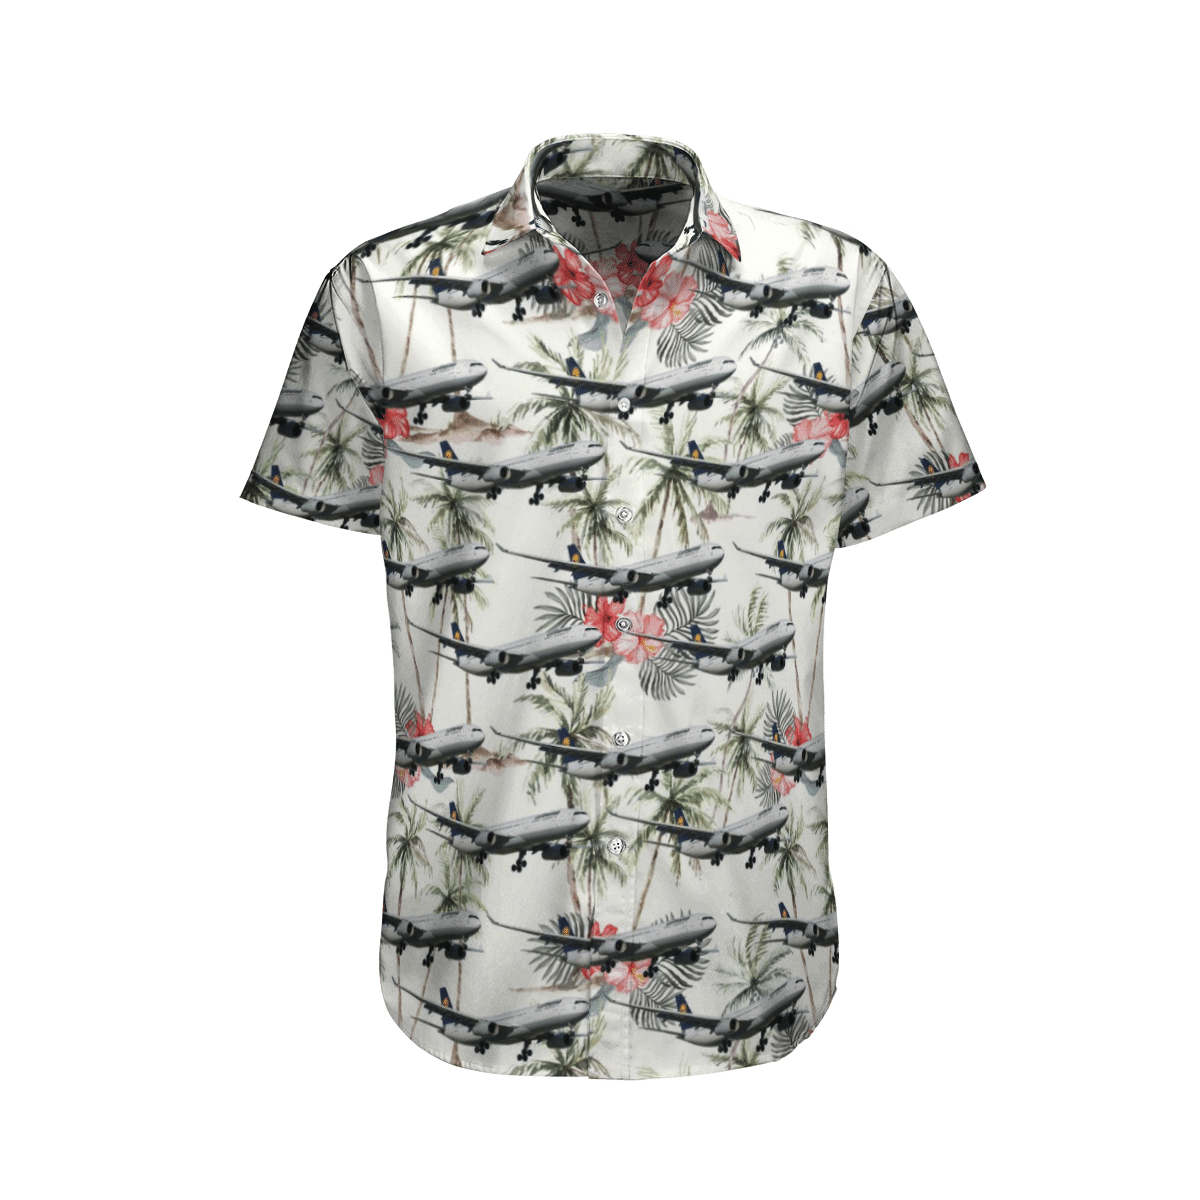 Get a new Hawaiian shirt to enjoy summer vacation 122